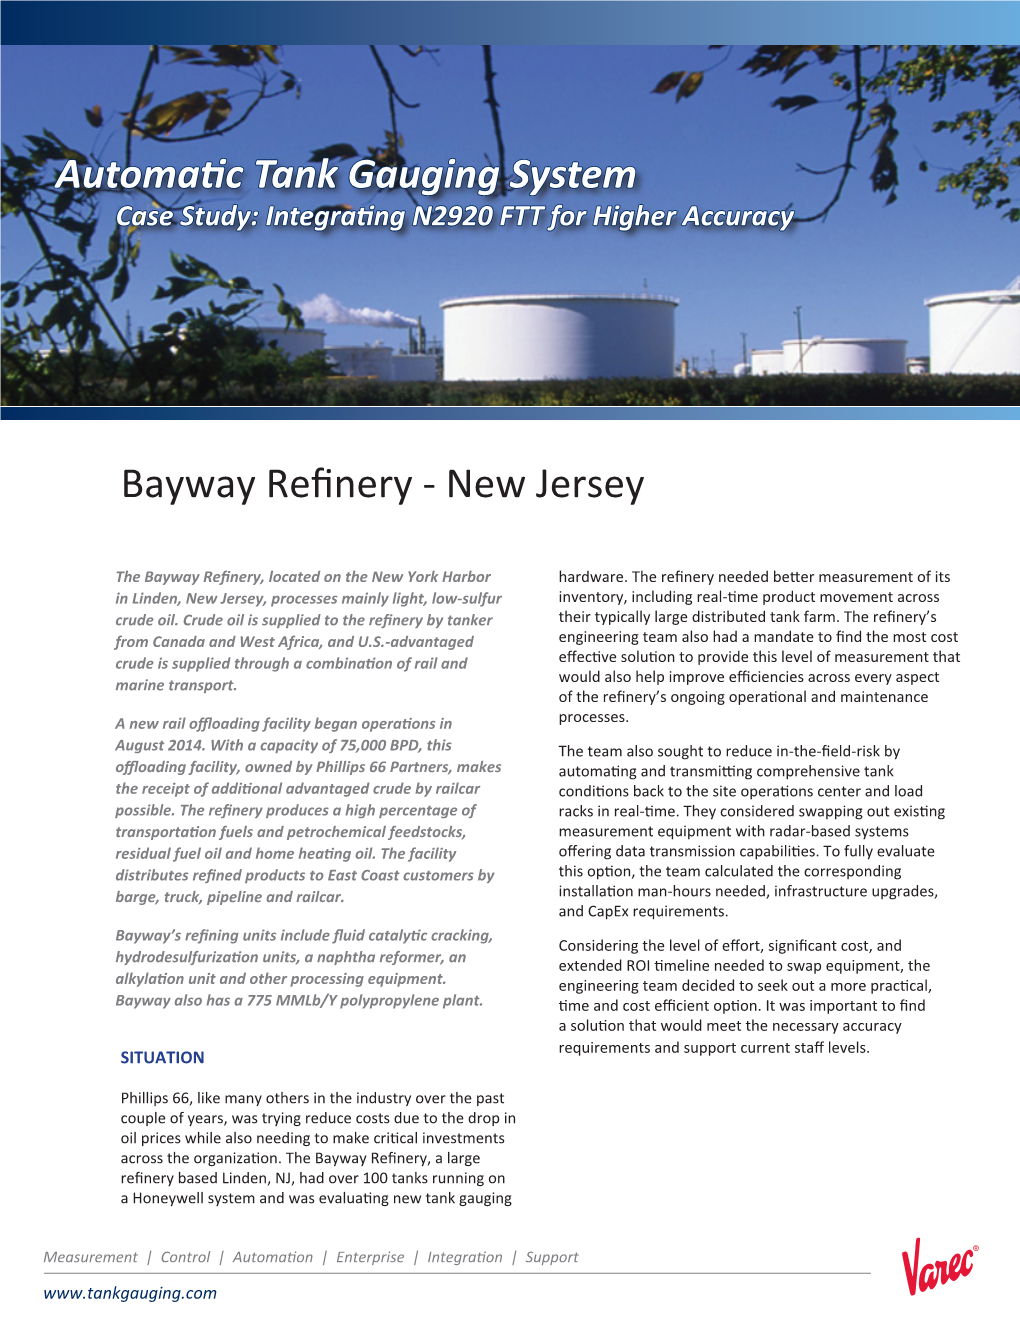 Bayway Refinery - New Jersey